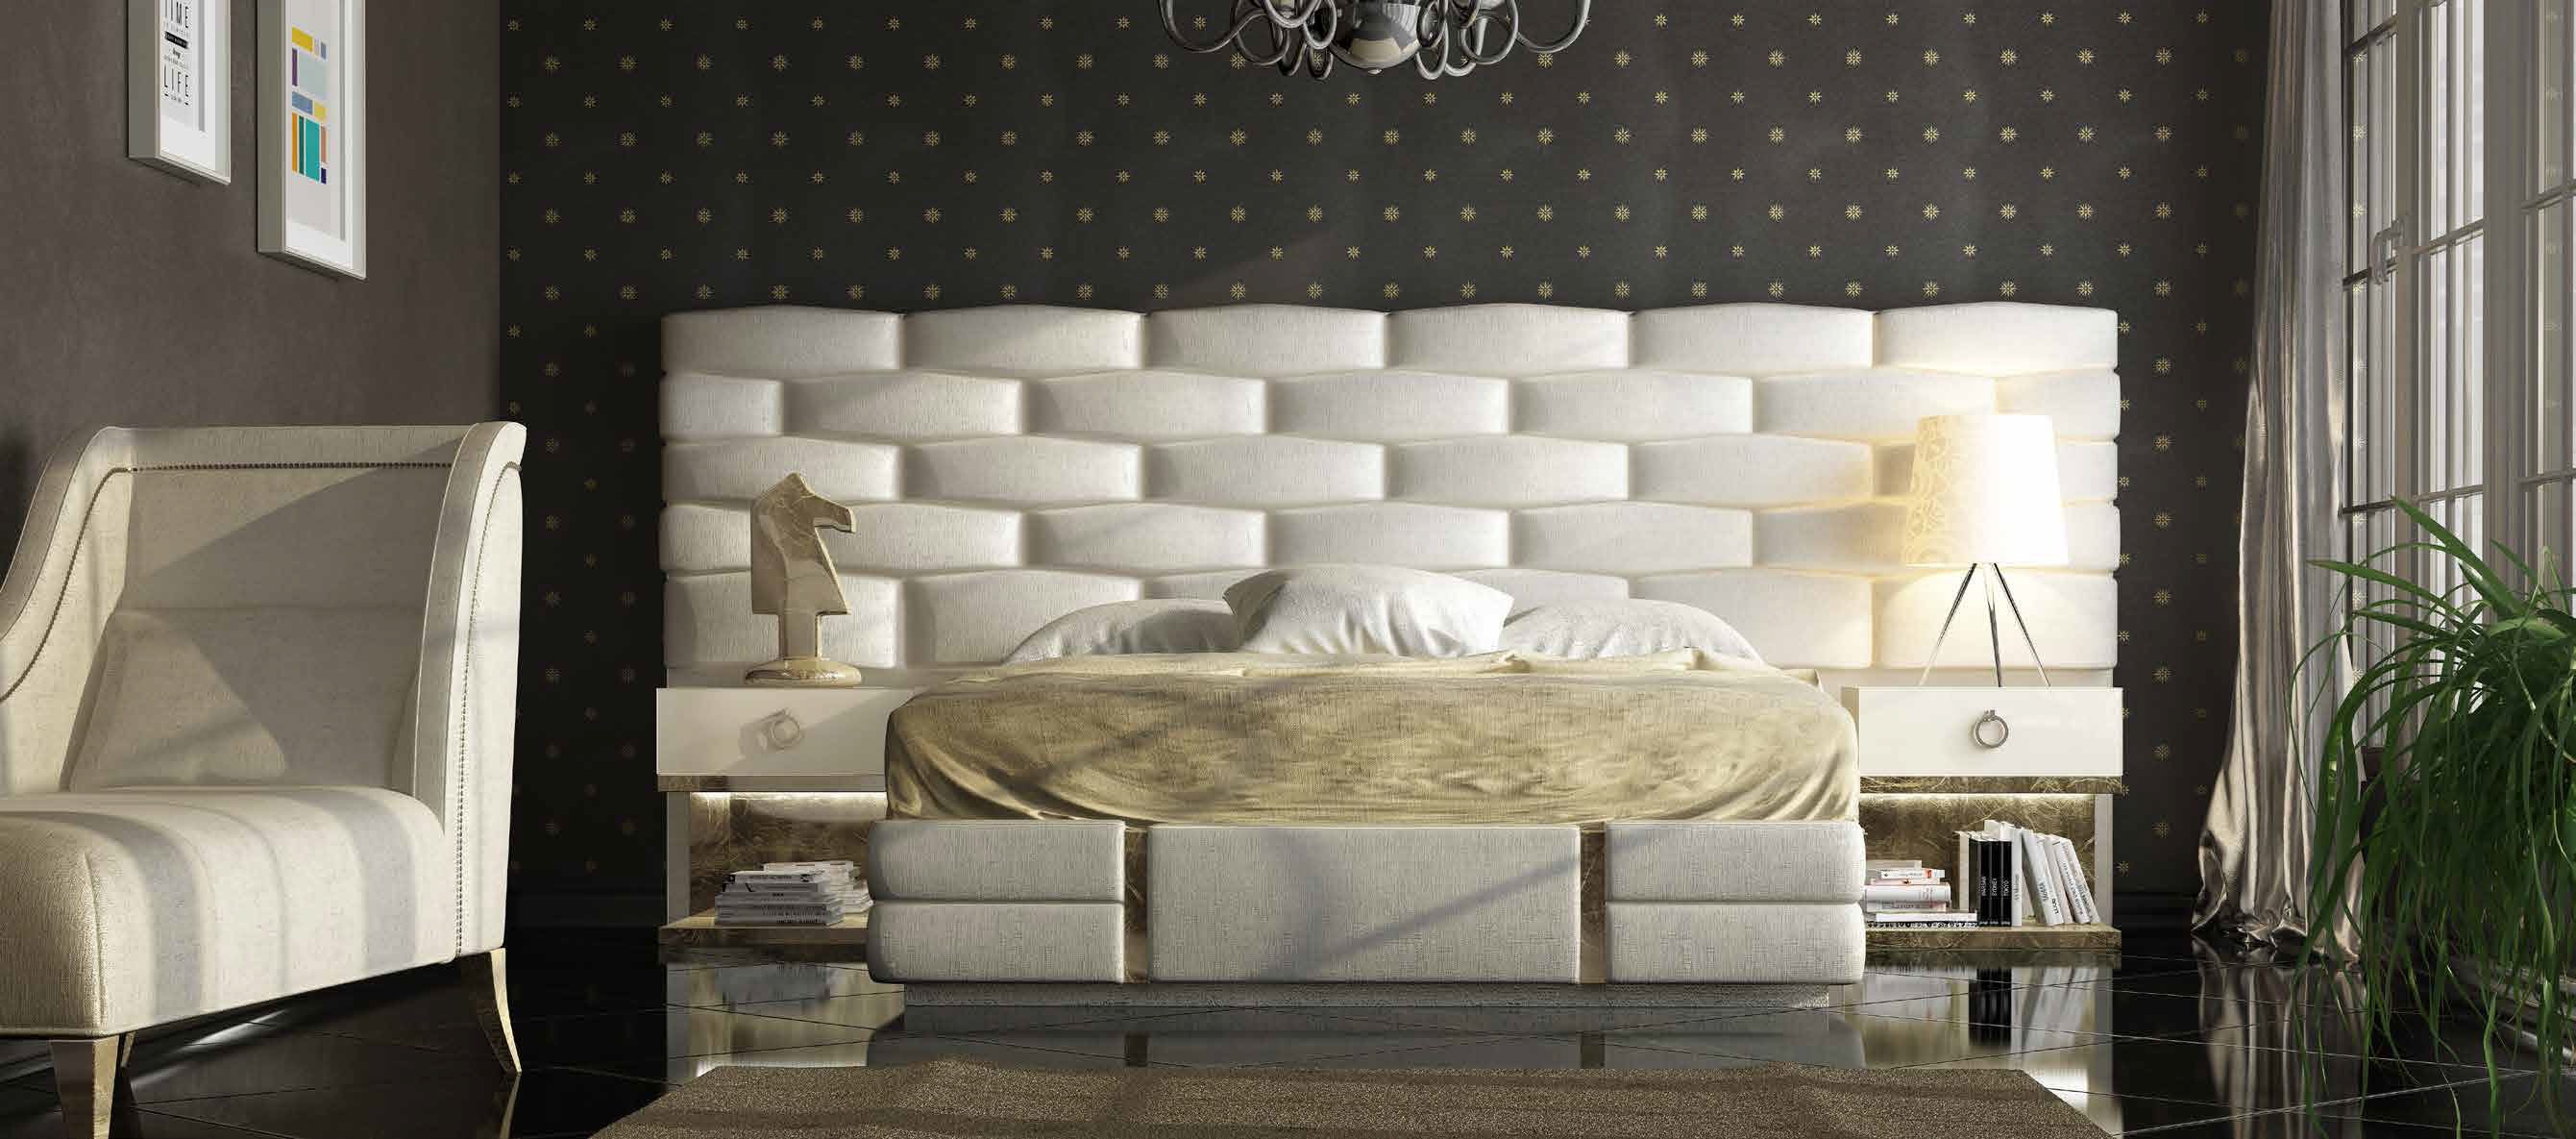 Brands Franco Furniture Bedrooms vol3, Spain DOR 37